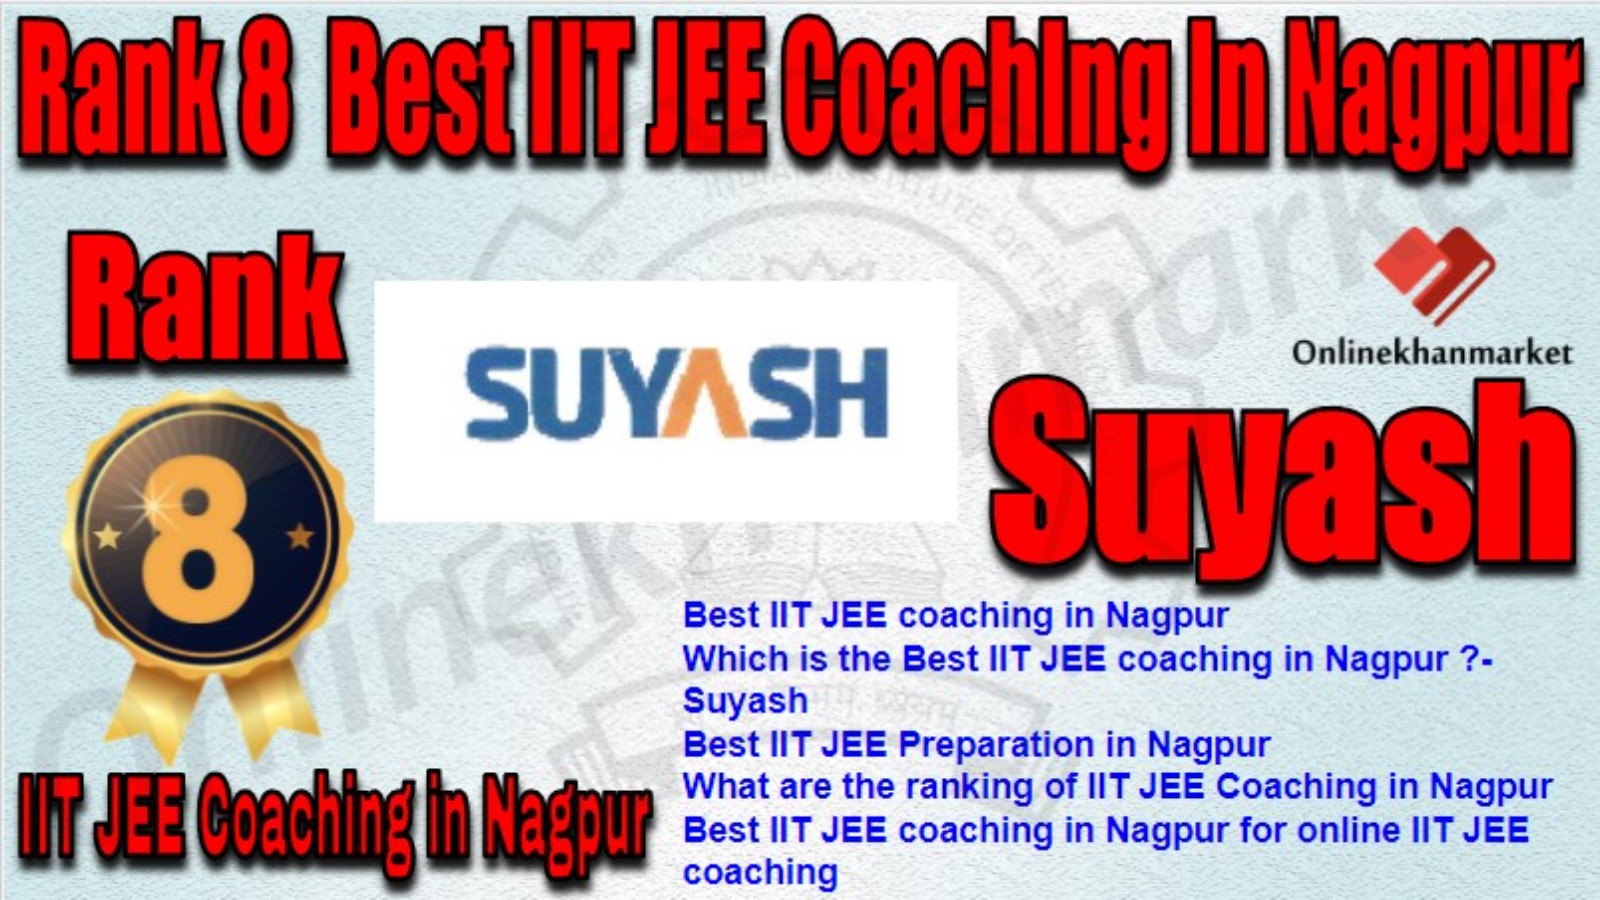 Rank 8 Best IIT JEE Coaching in nagpur